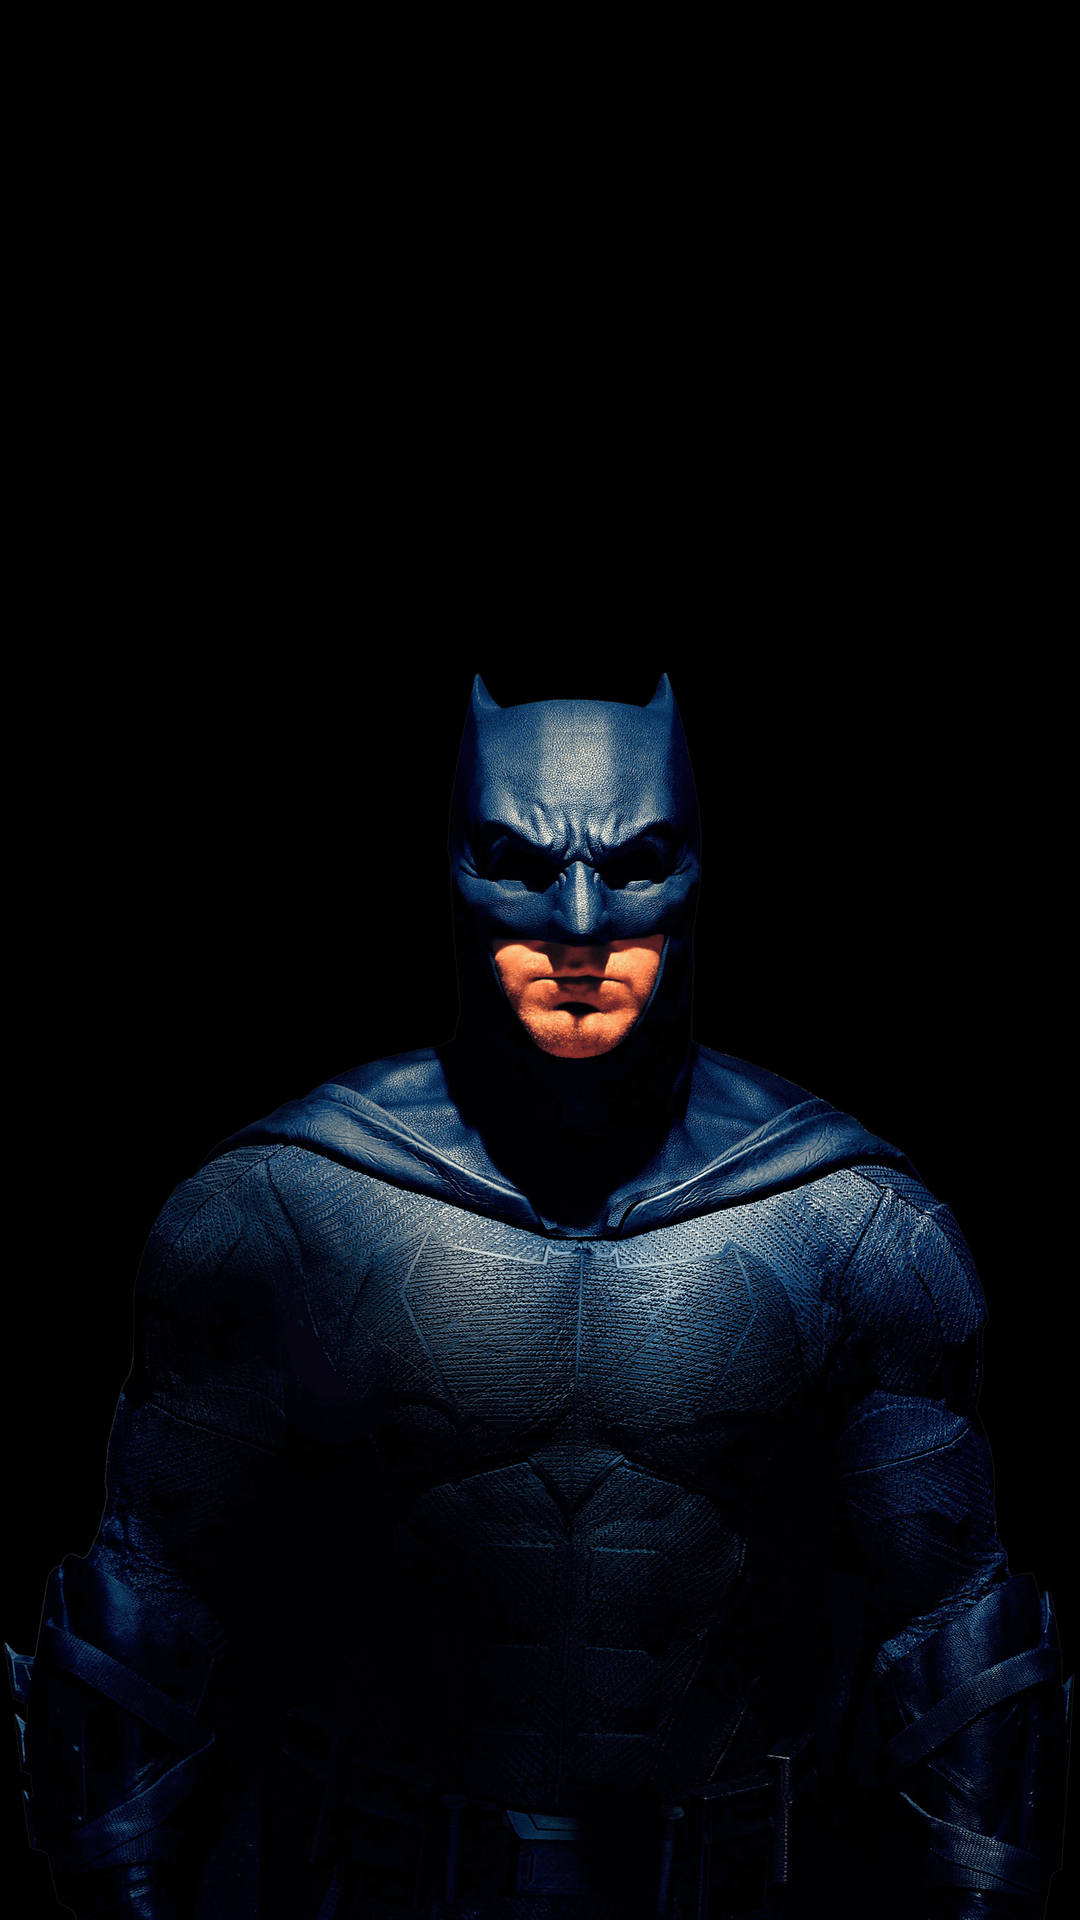 Batmanneutral Look 4k: Batman Neutral Look 4k. Wallpaper